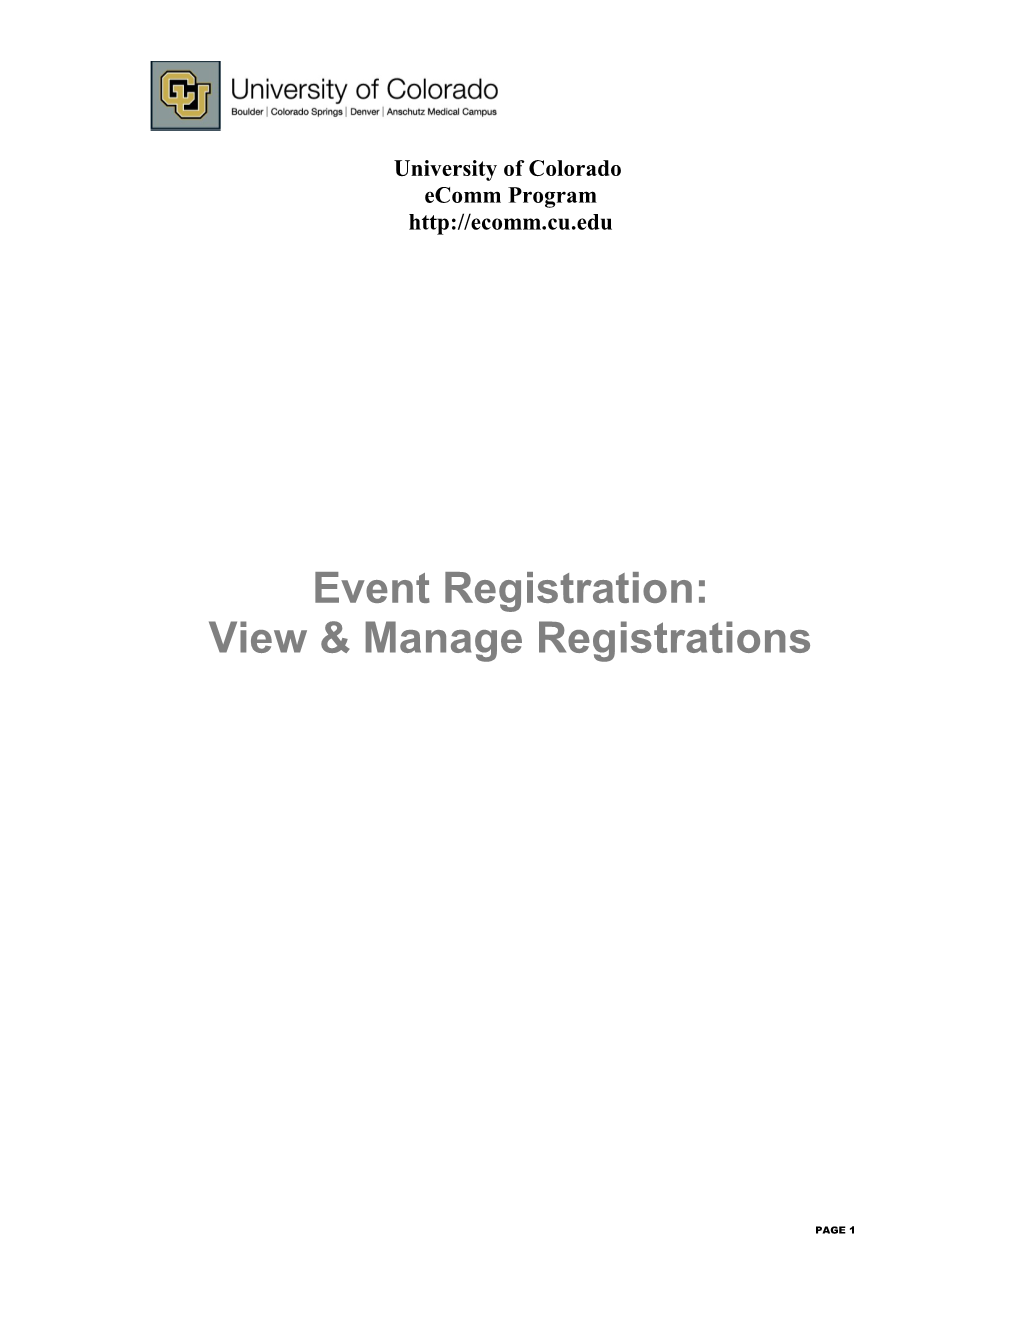 Event Registration View & Manage Registrations